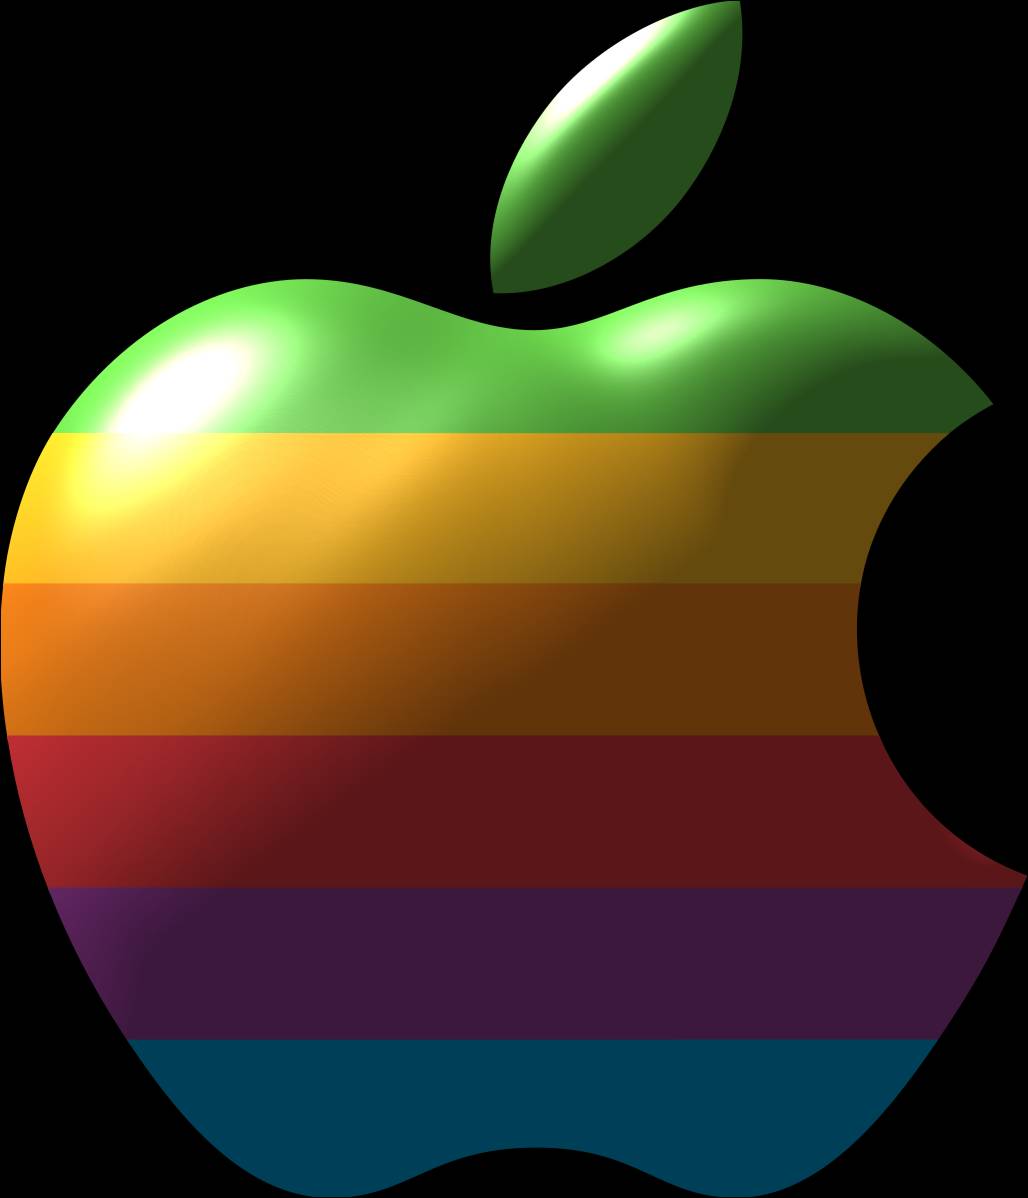 custom apple logo (classic version) by redstonemaker on DeviantArt